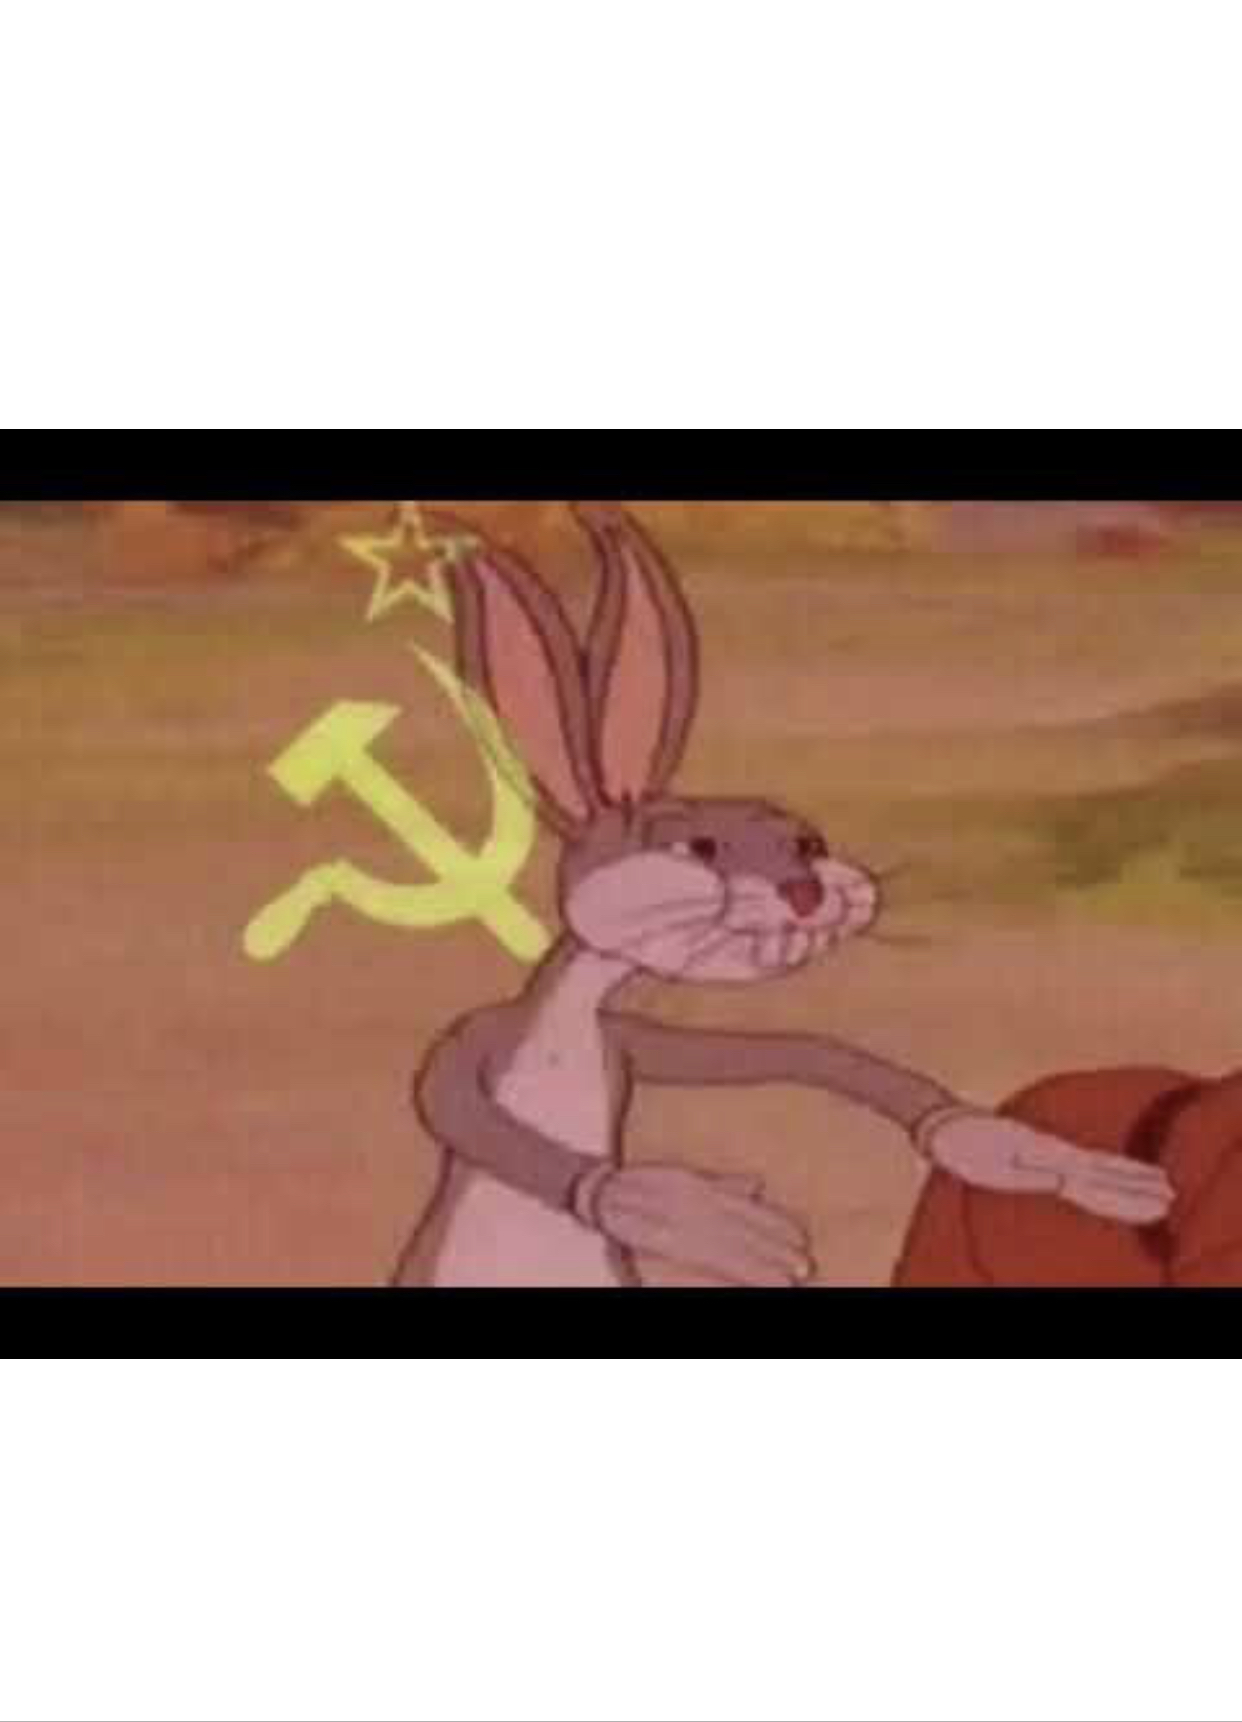 High Quality Communist bugs bunny Blank Meme Template